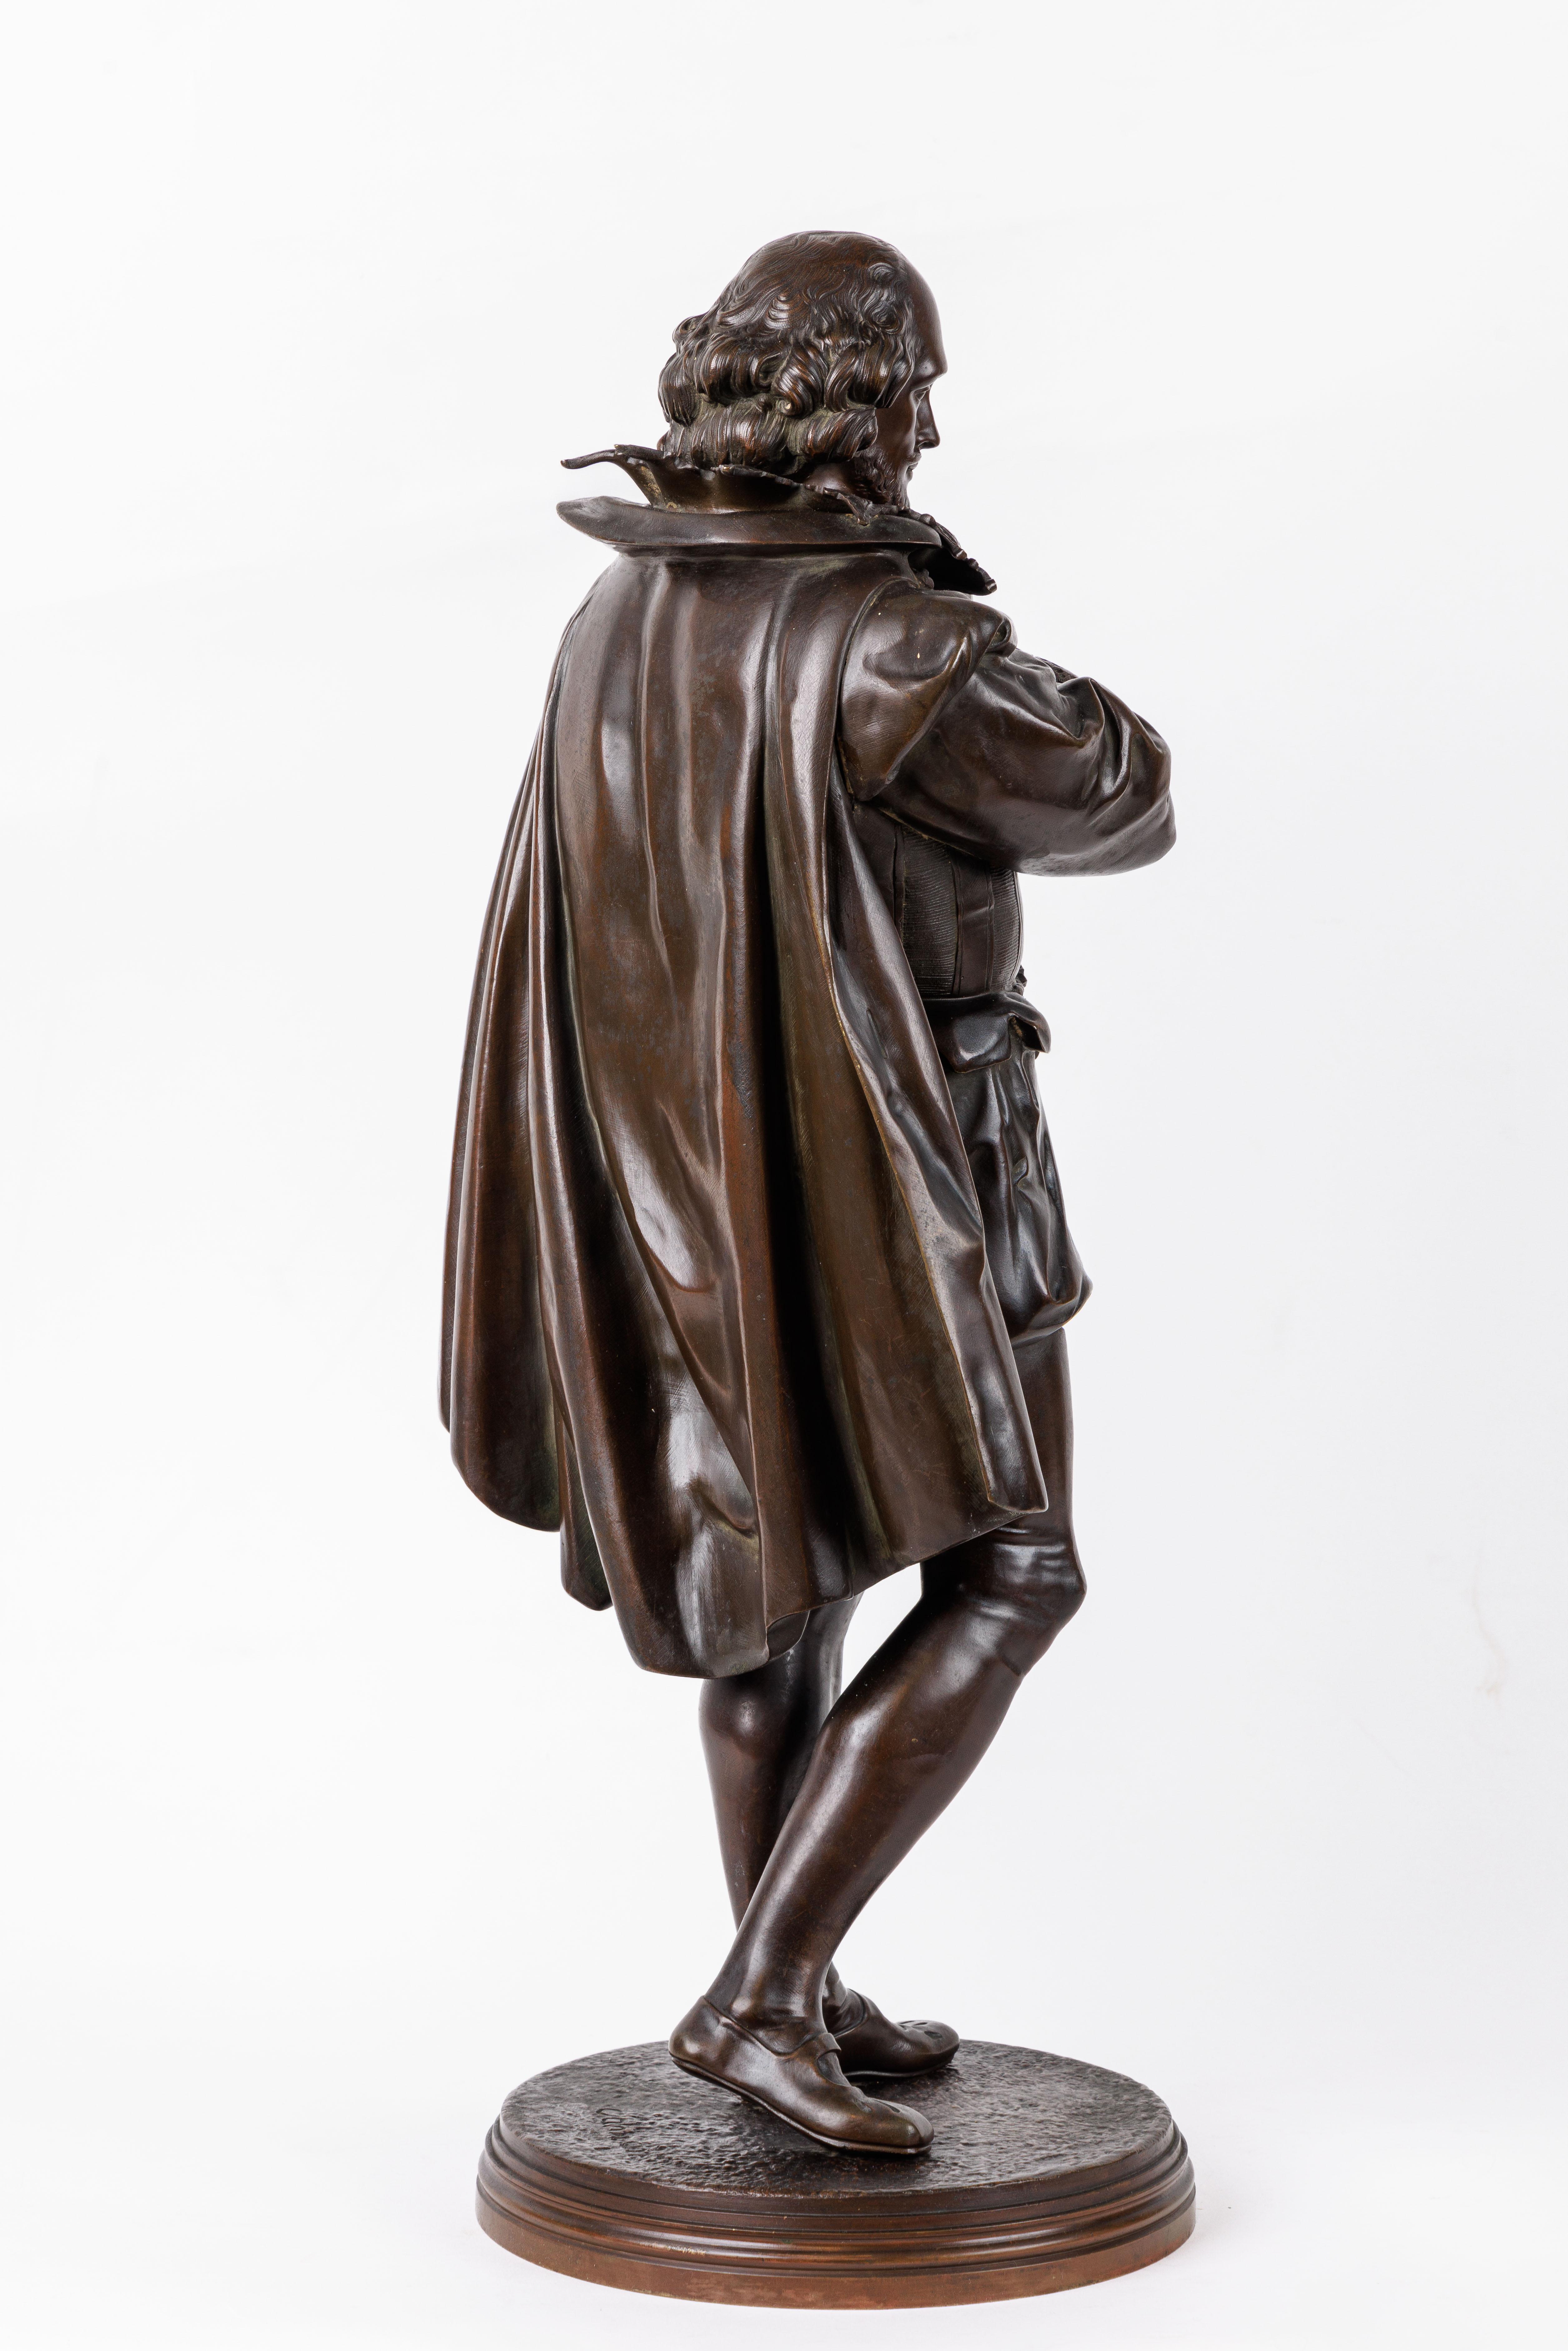 19th Century Jean Jules B. Salmson, A Patinated Bronze Sculpture of William Shakespeare